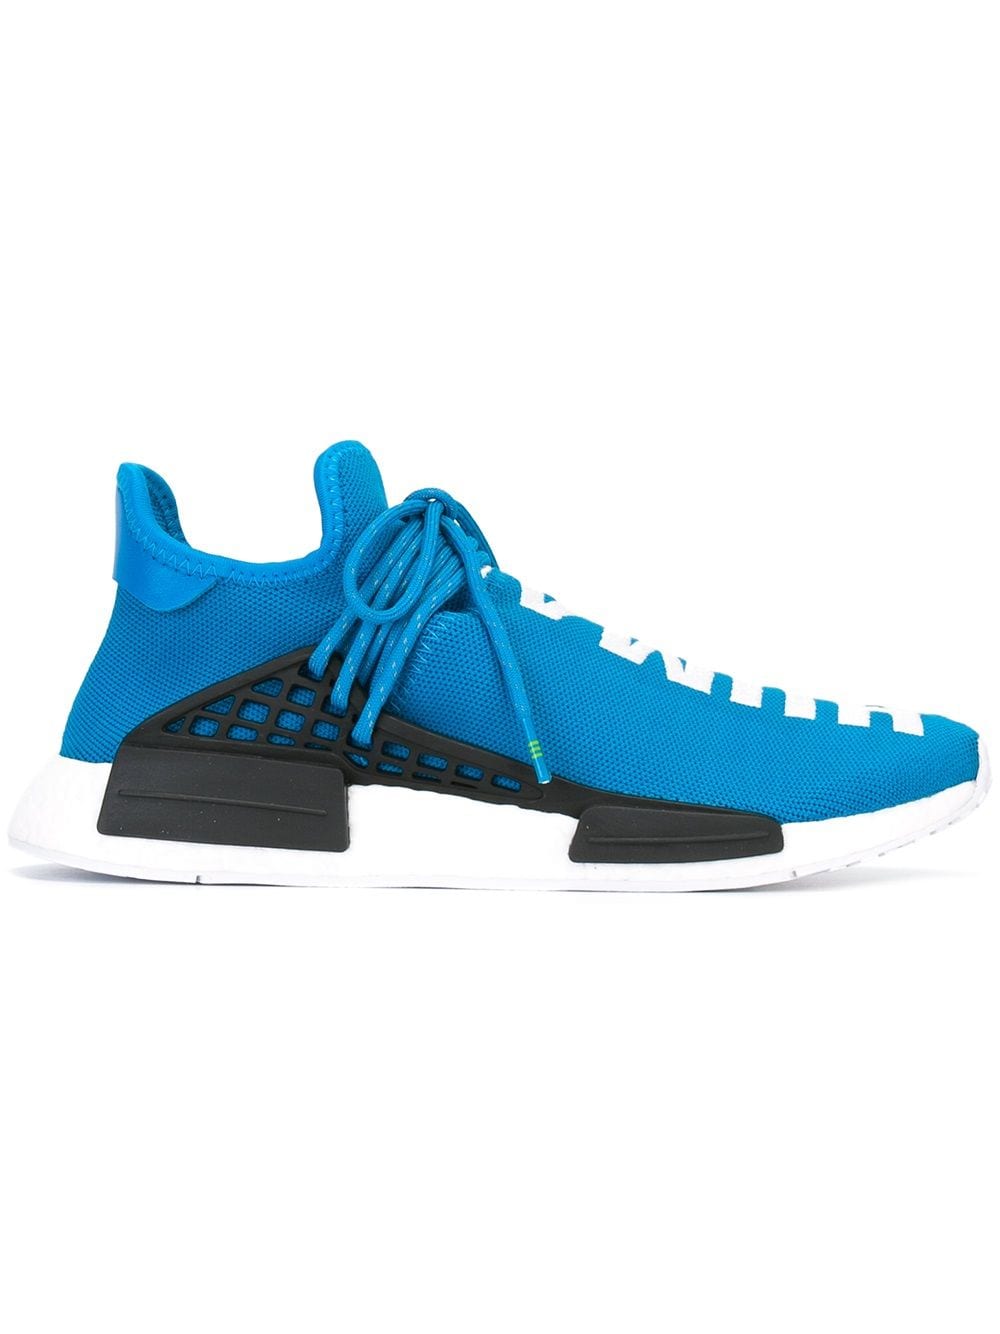 adidas x Pharrell Williams Human Race NMD "Blue" sneakers von adidas